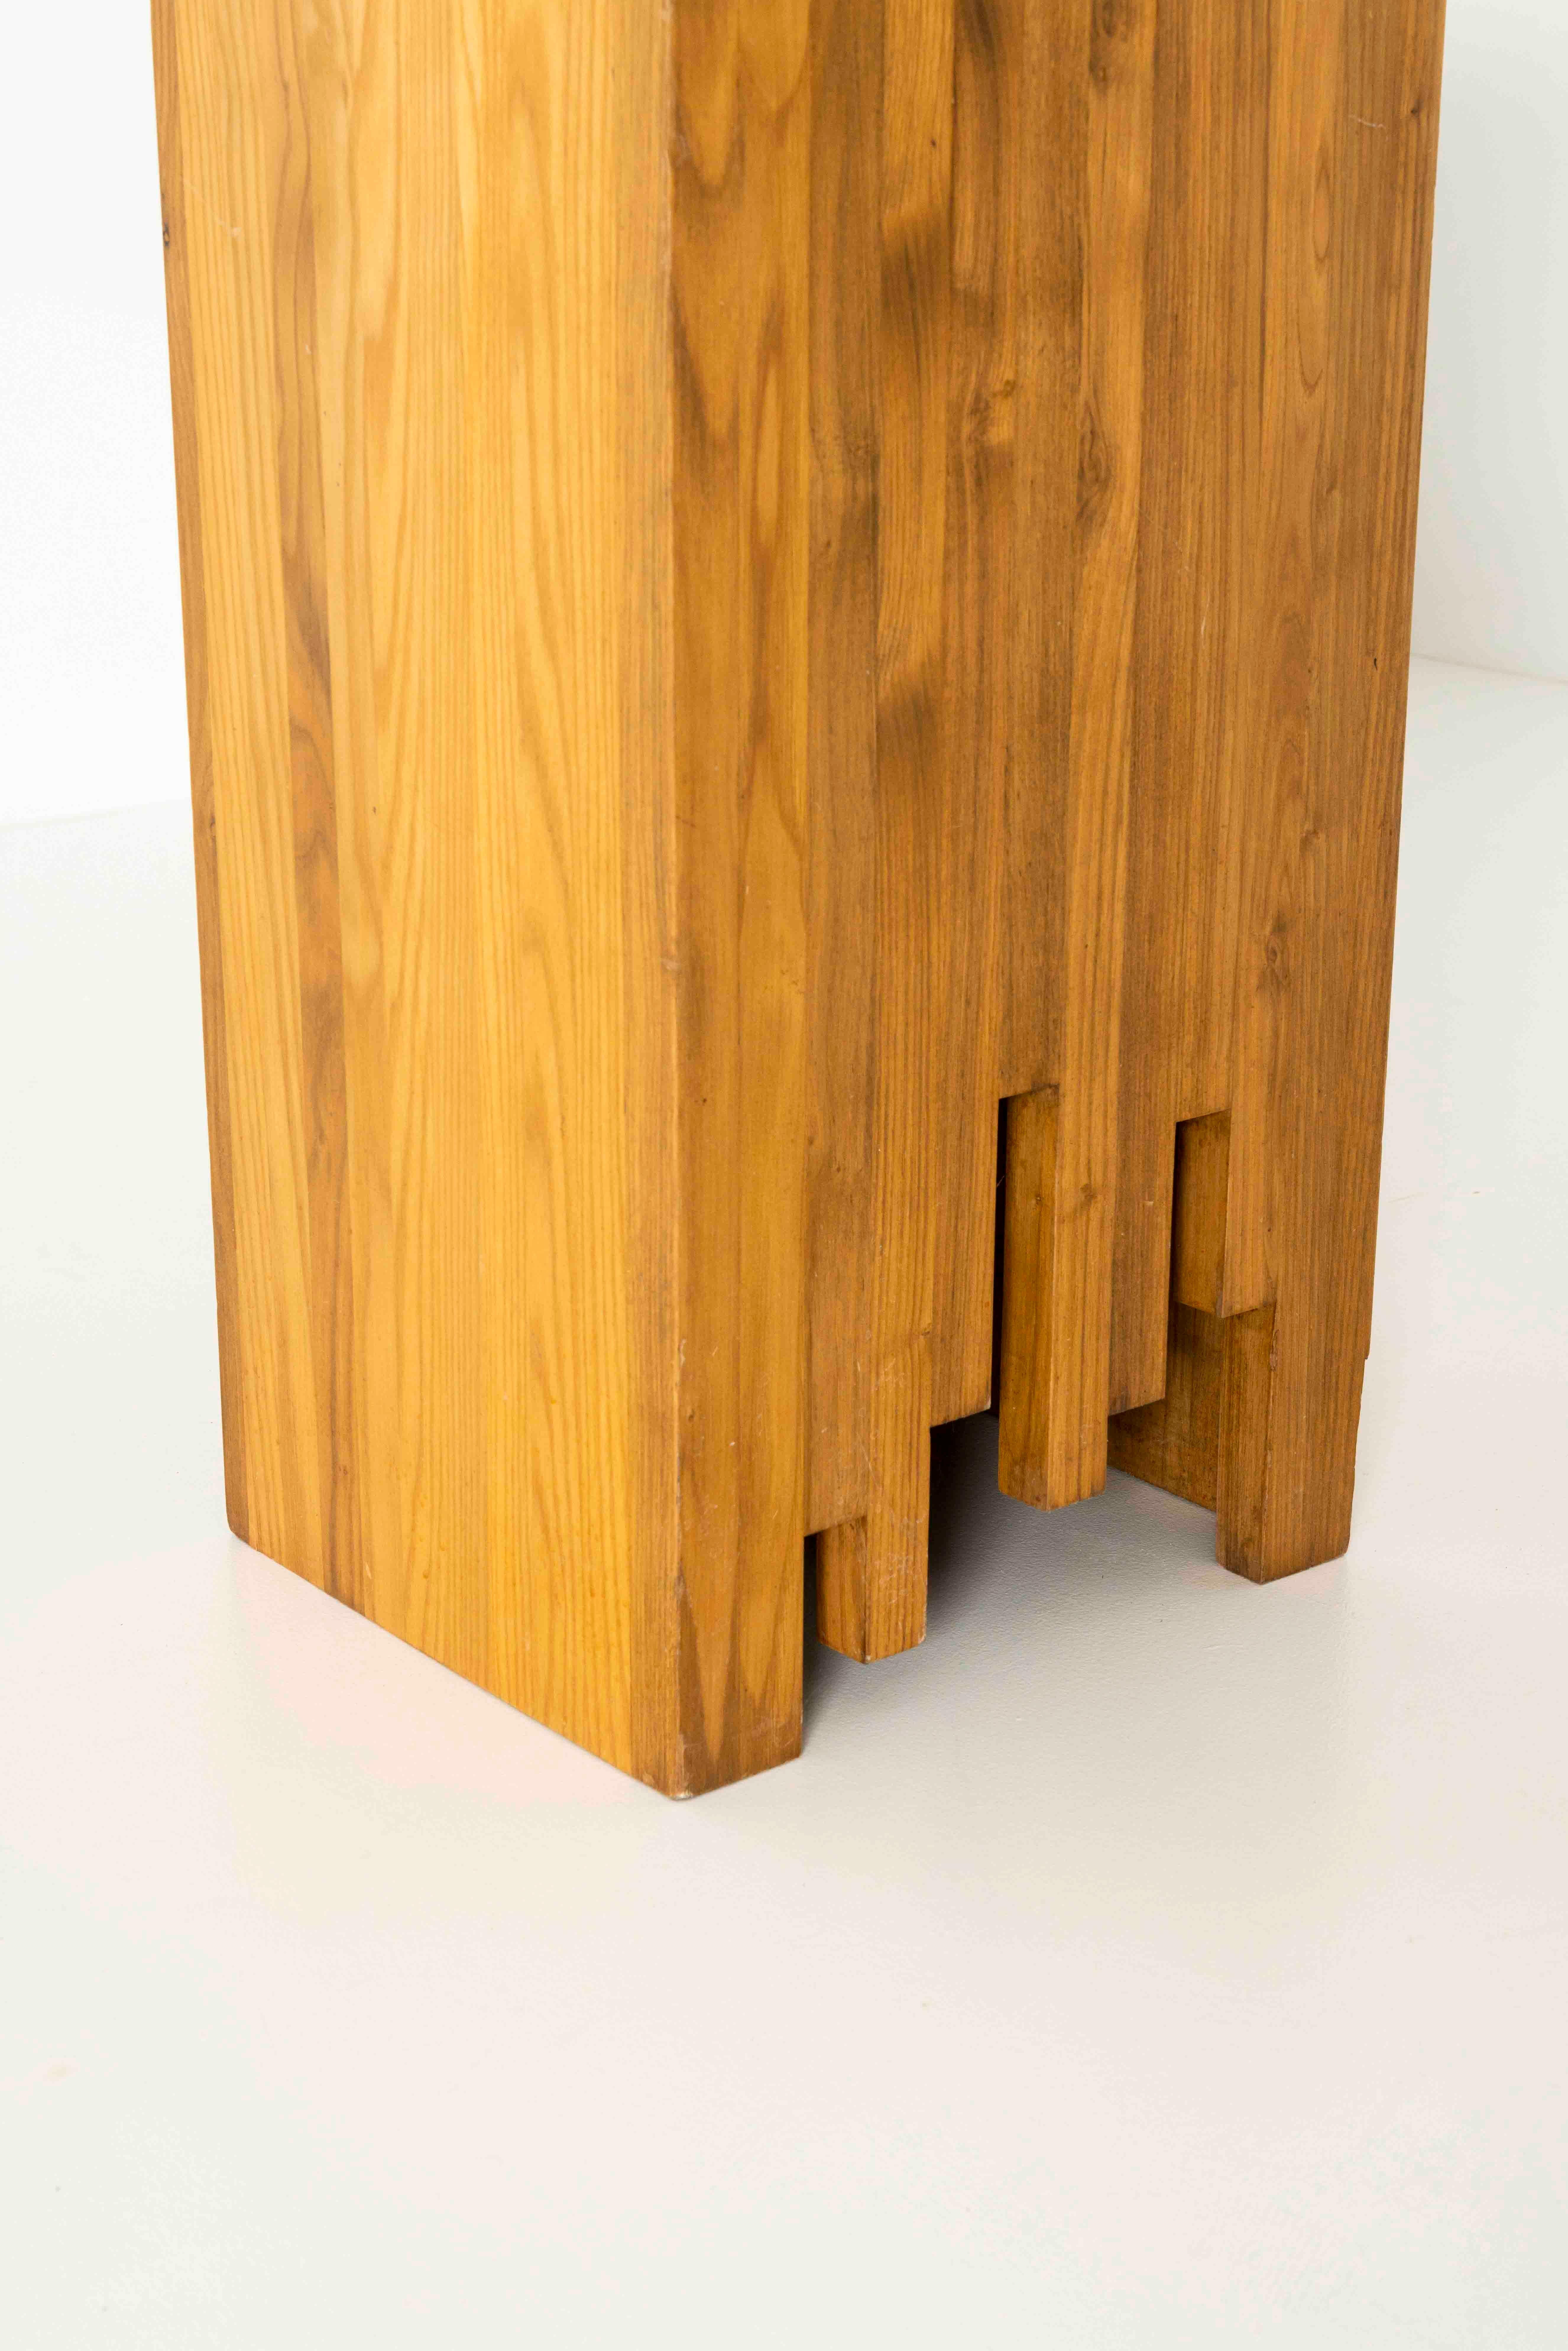 Wood Italian Modern Console by Edmondo Cirillo, Italy 1980s For Sale